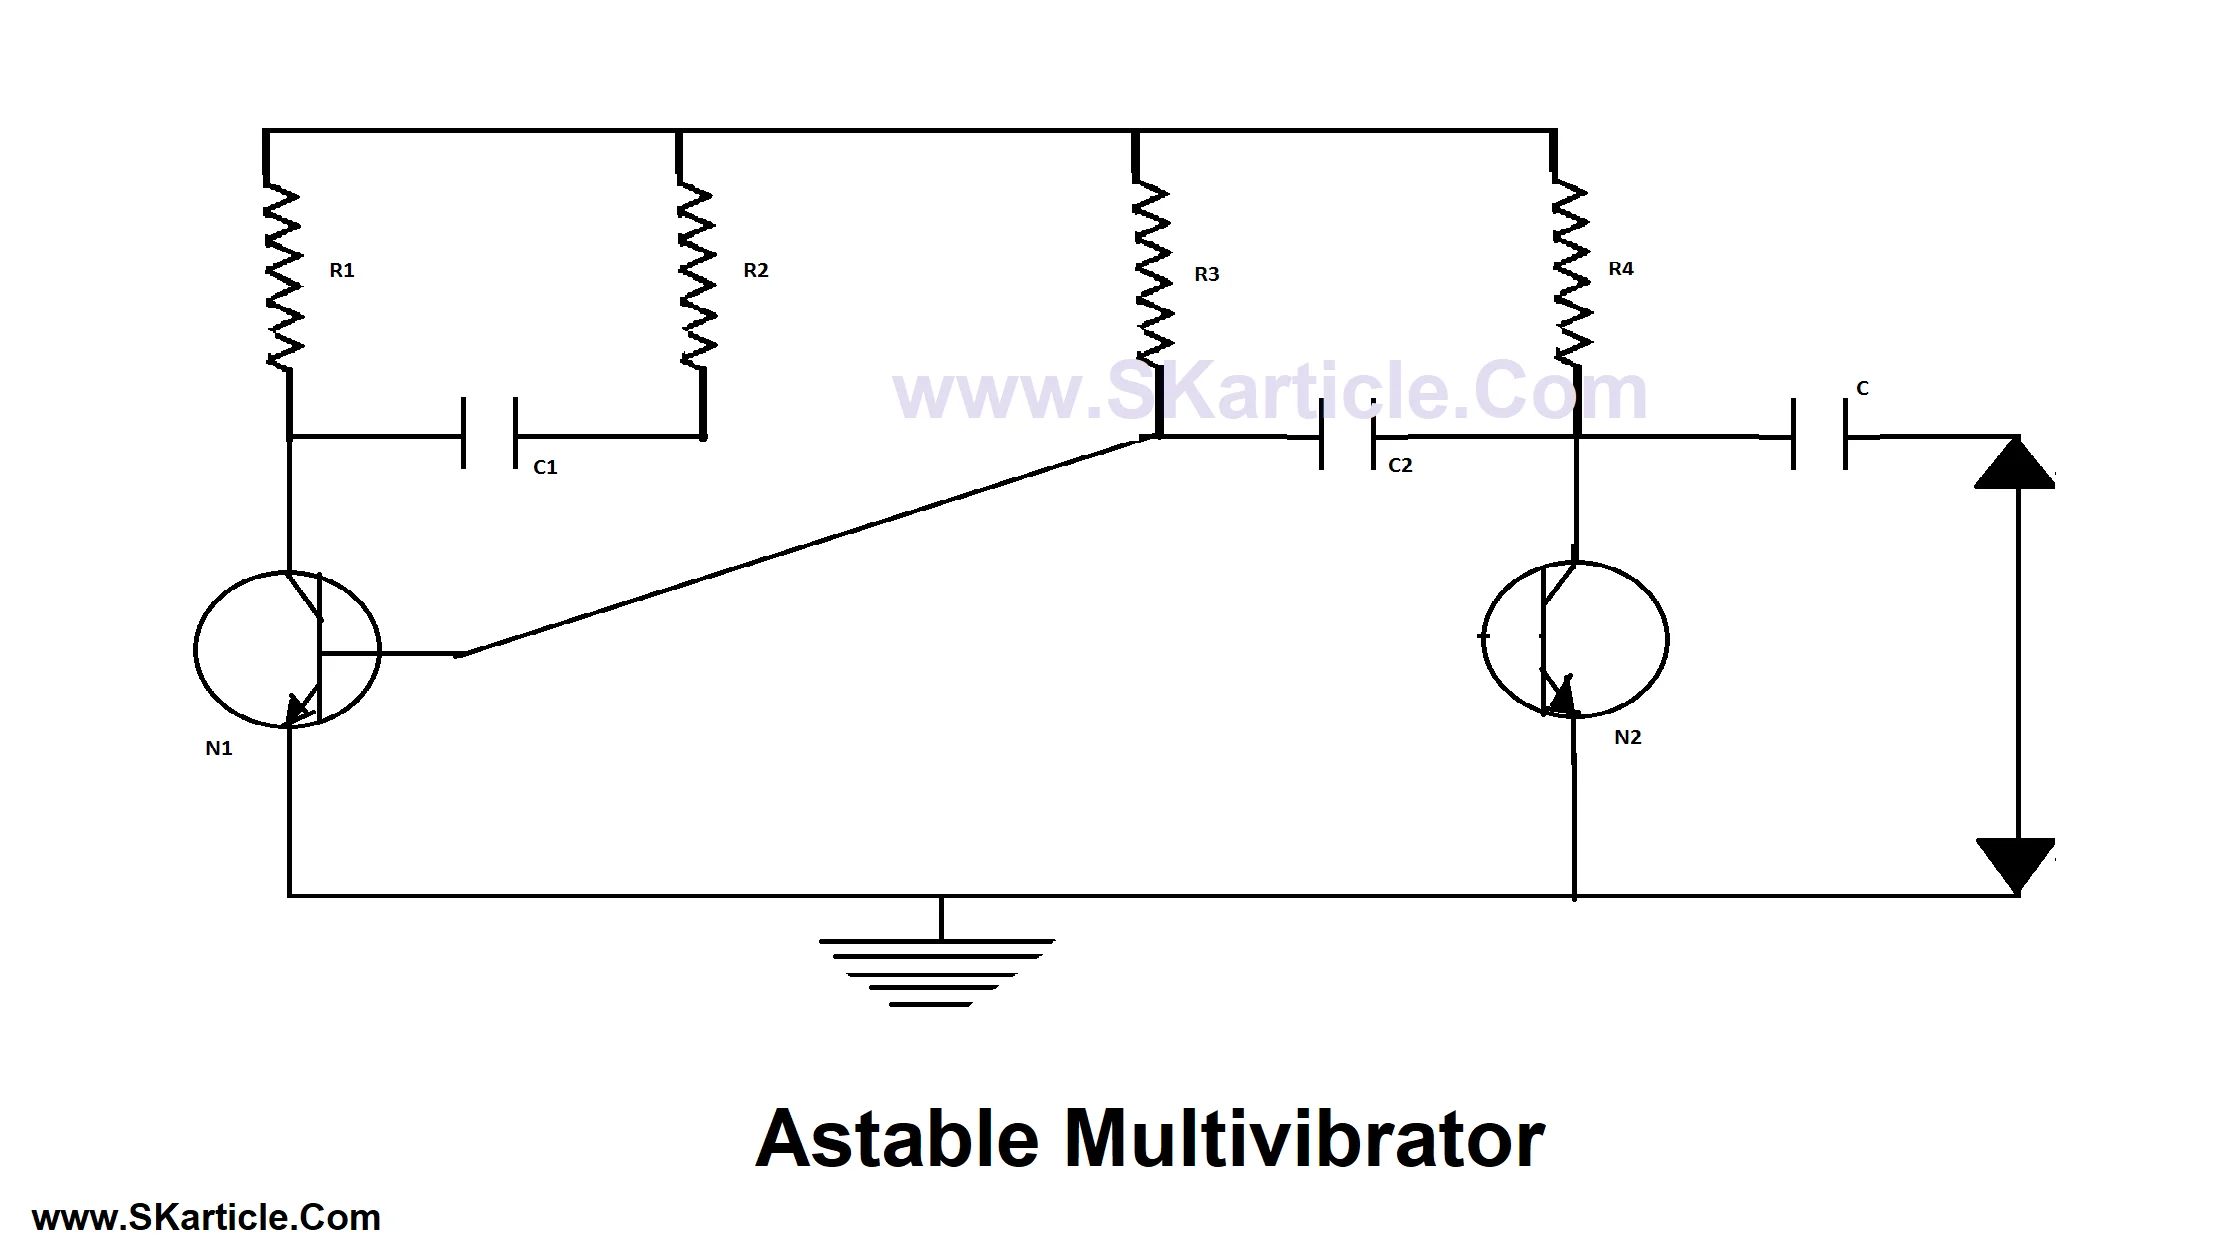 Circuit Diagram of Astable Multivibrator